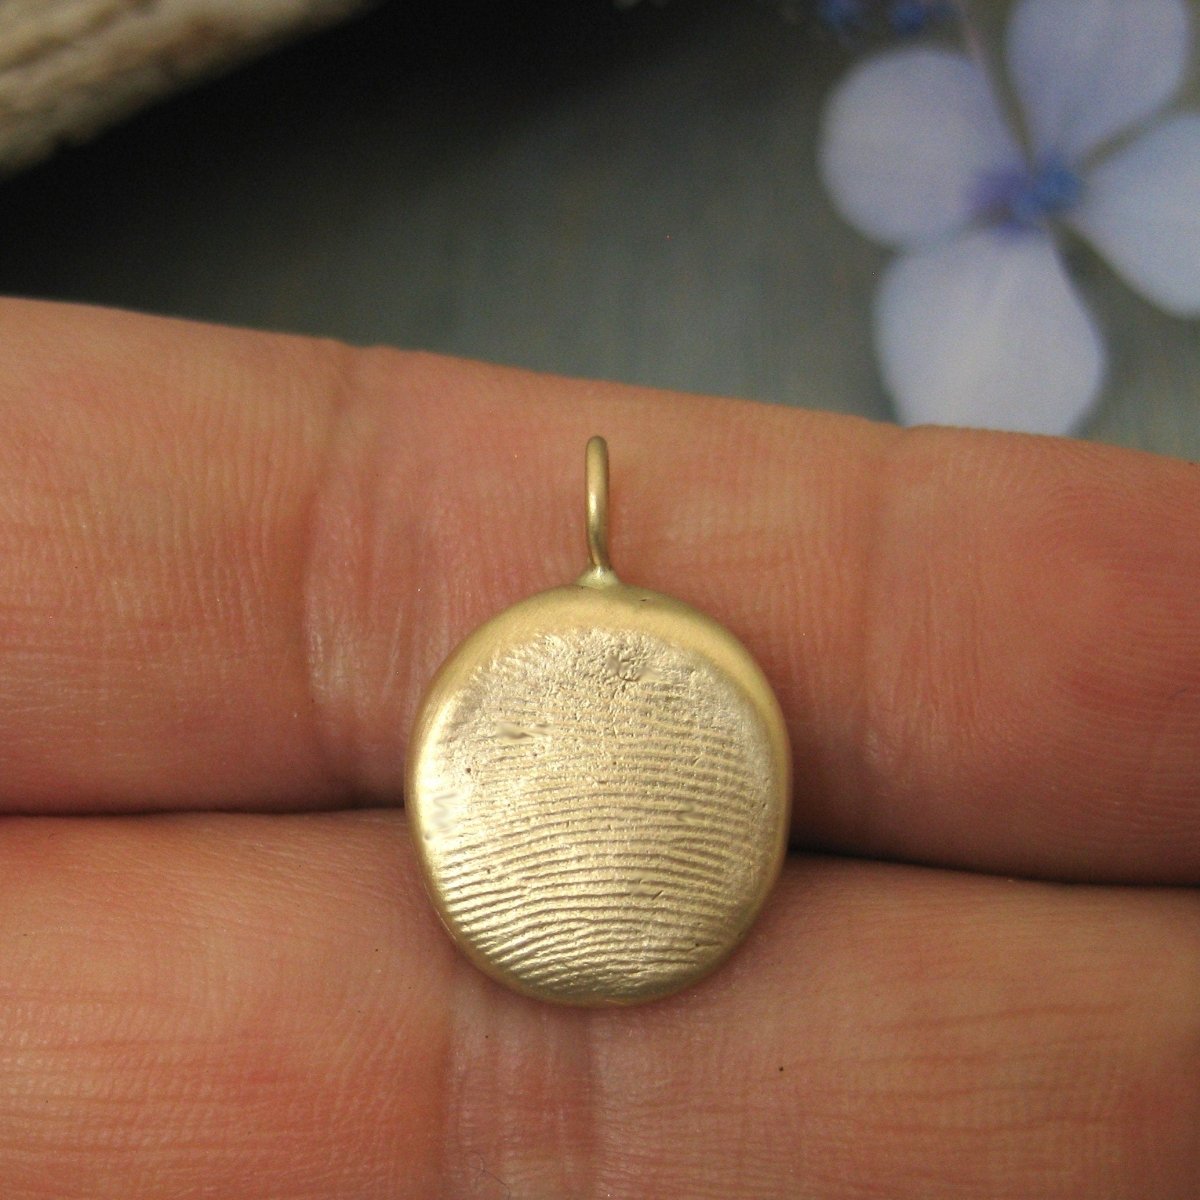 Two Person 14K Gold Fingerprint Impression Pendant, Double Sided Fingerprint or Thumbprint Pendant. - Luxe Design Jewellery